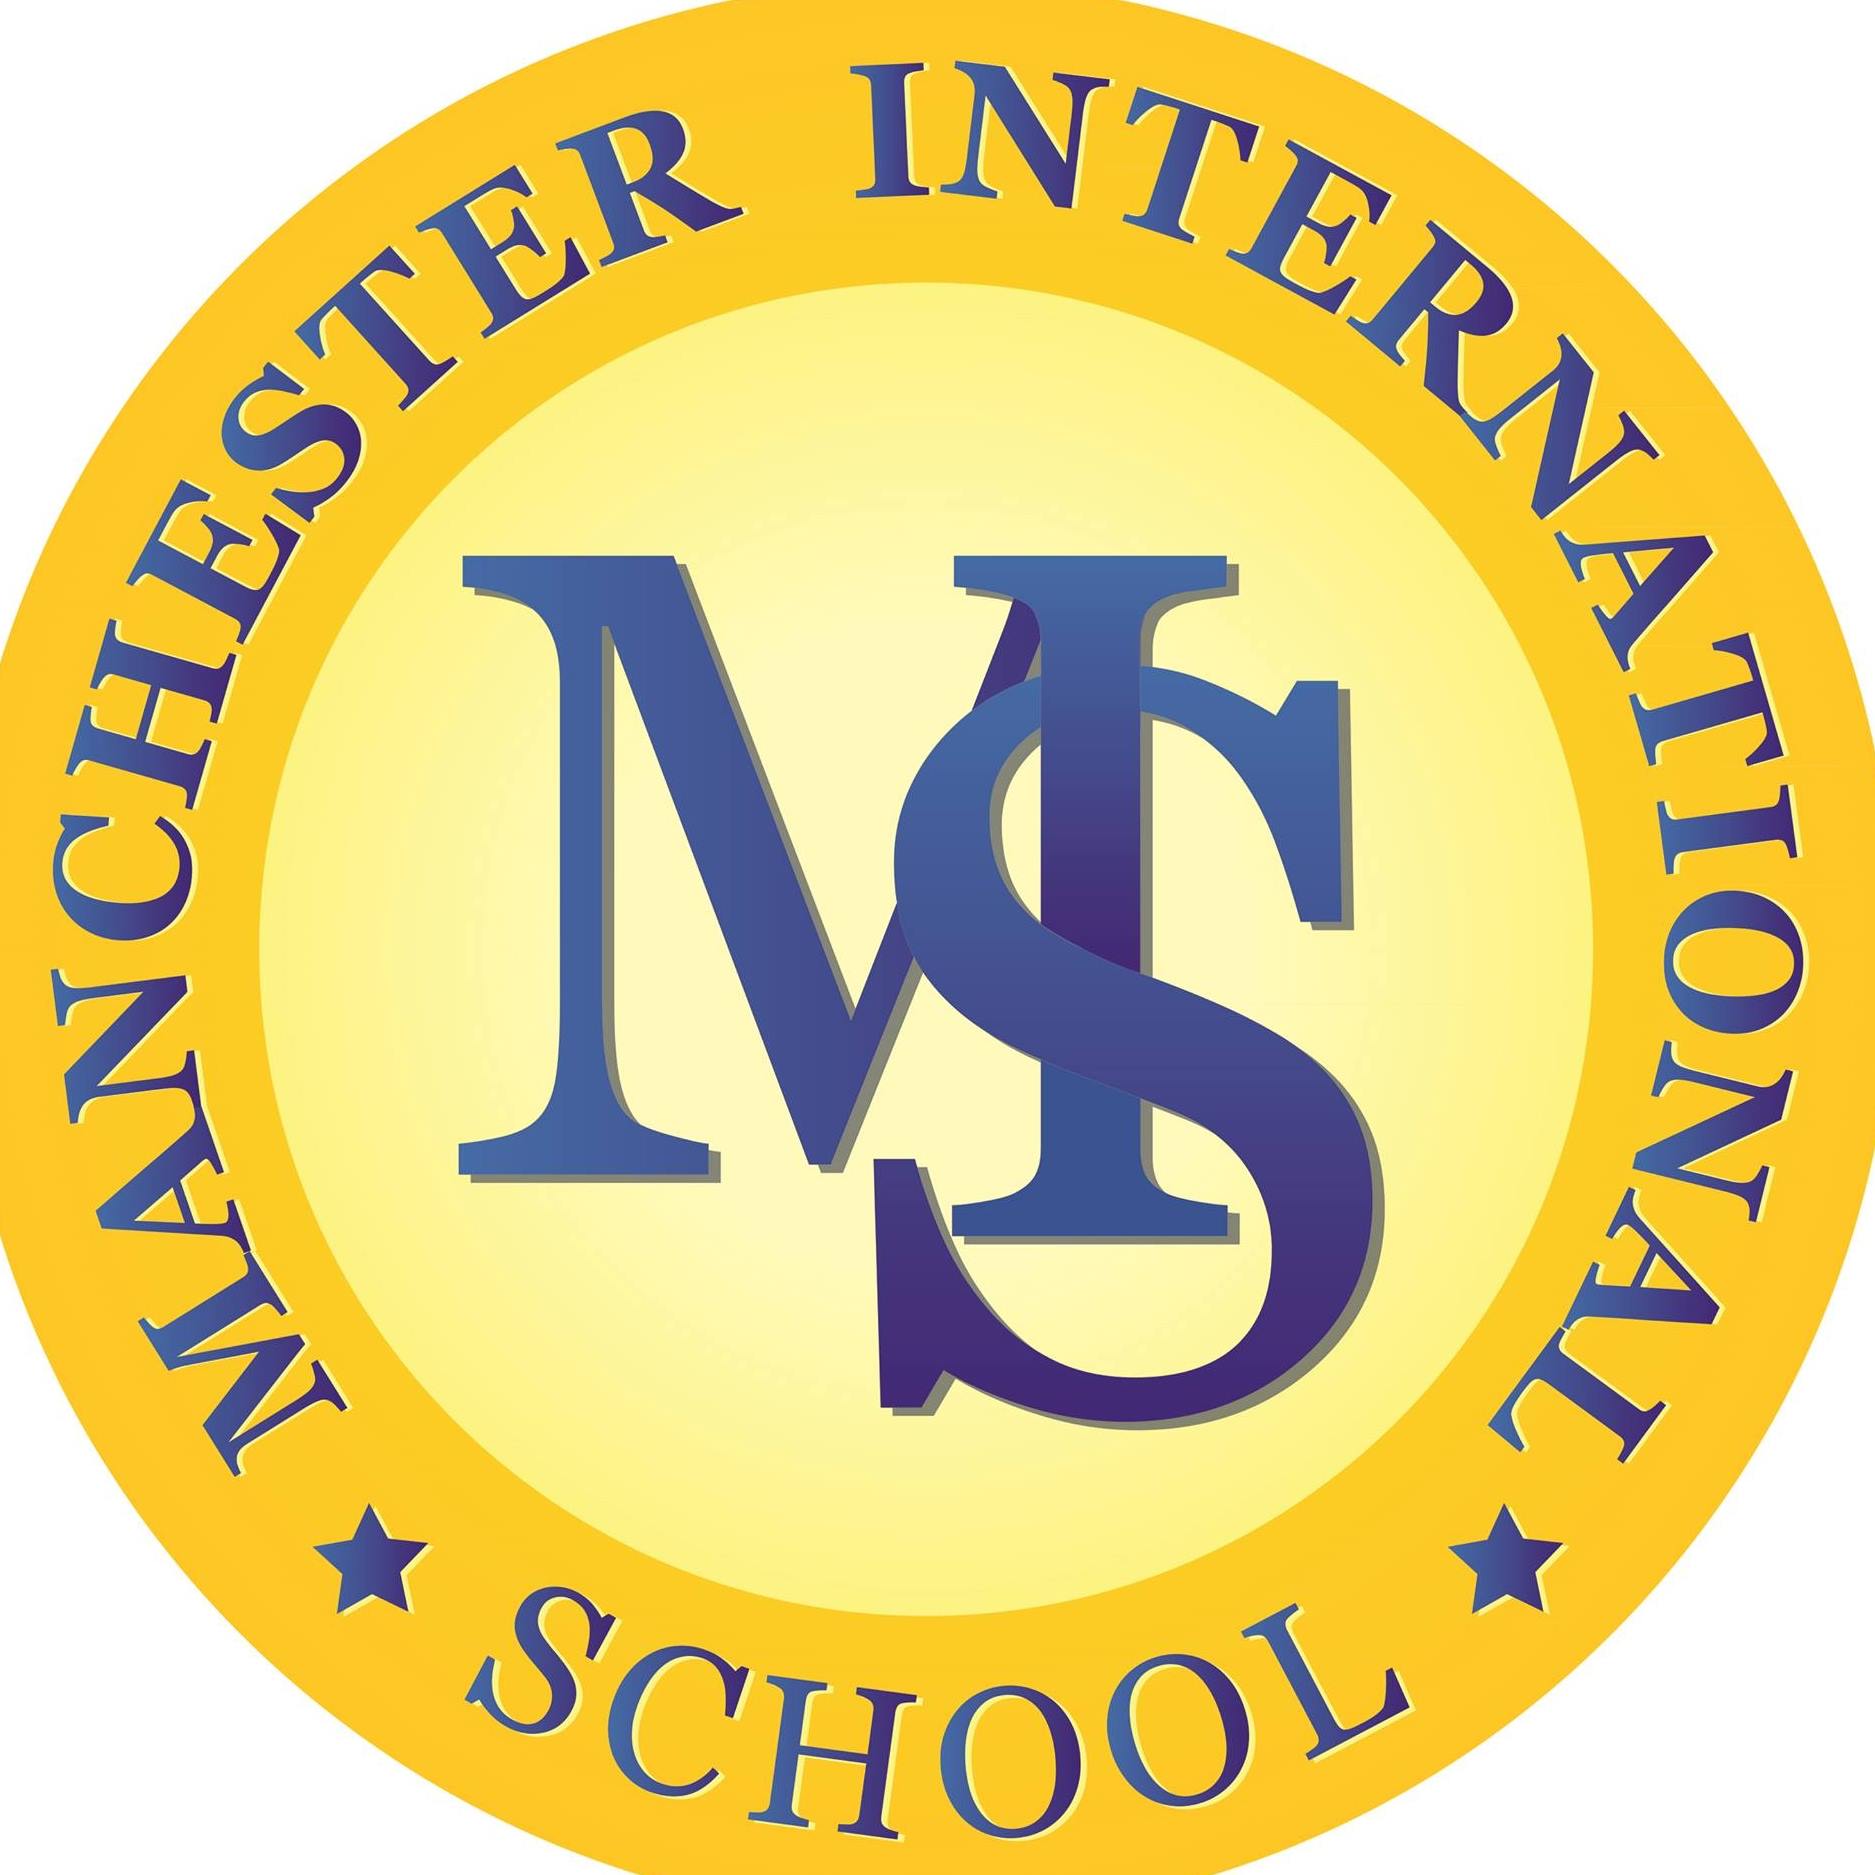 Manchester International School